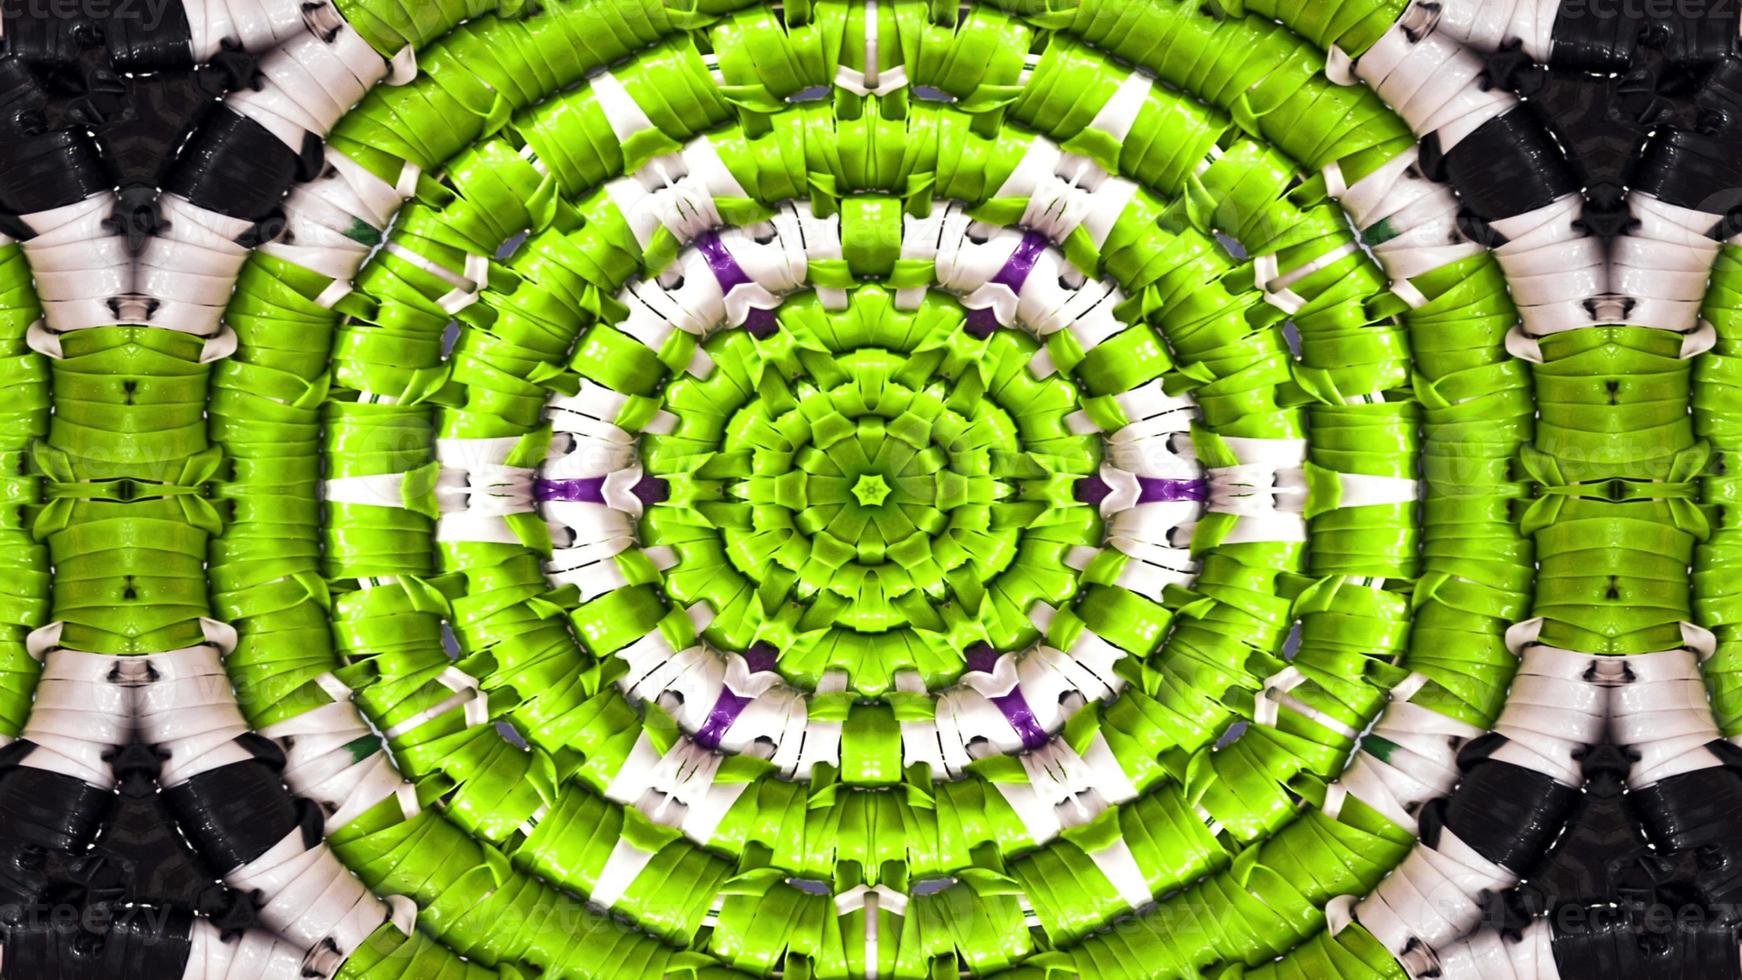 caleidoscópio simétrico colorido abstrato foto